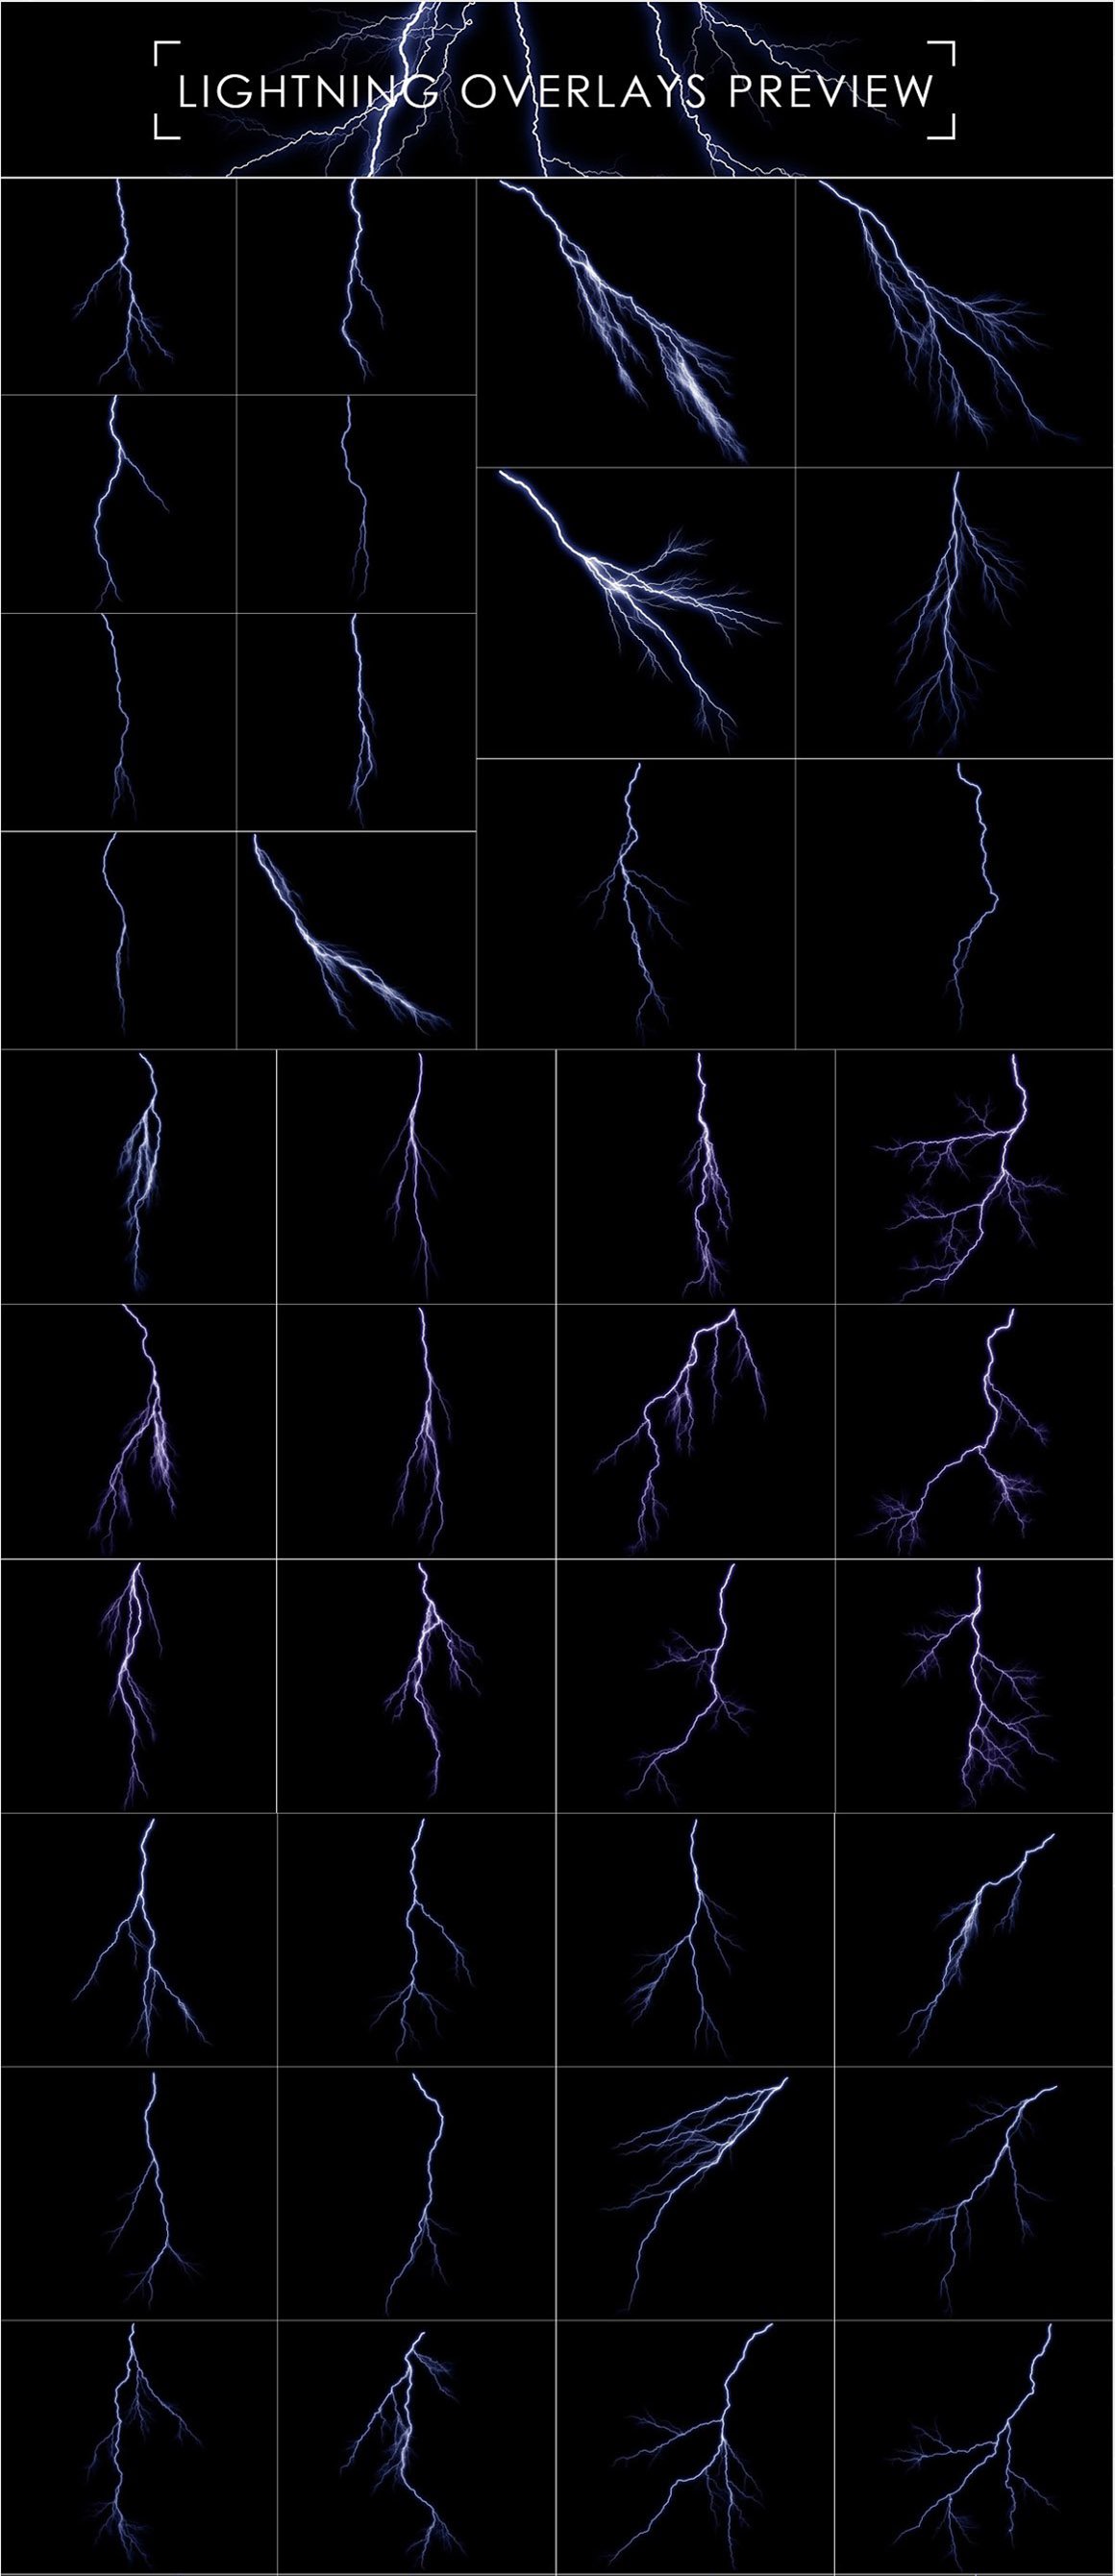 Lightning Effect Overlays